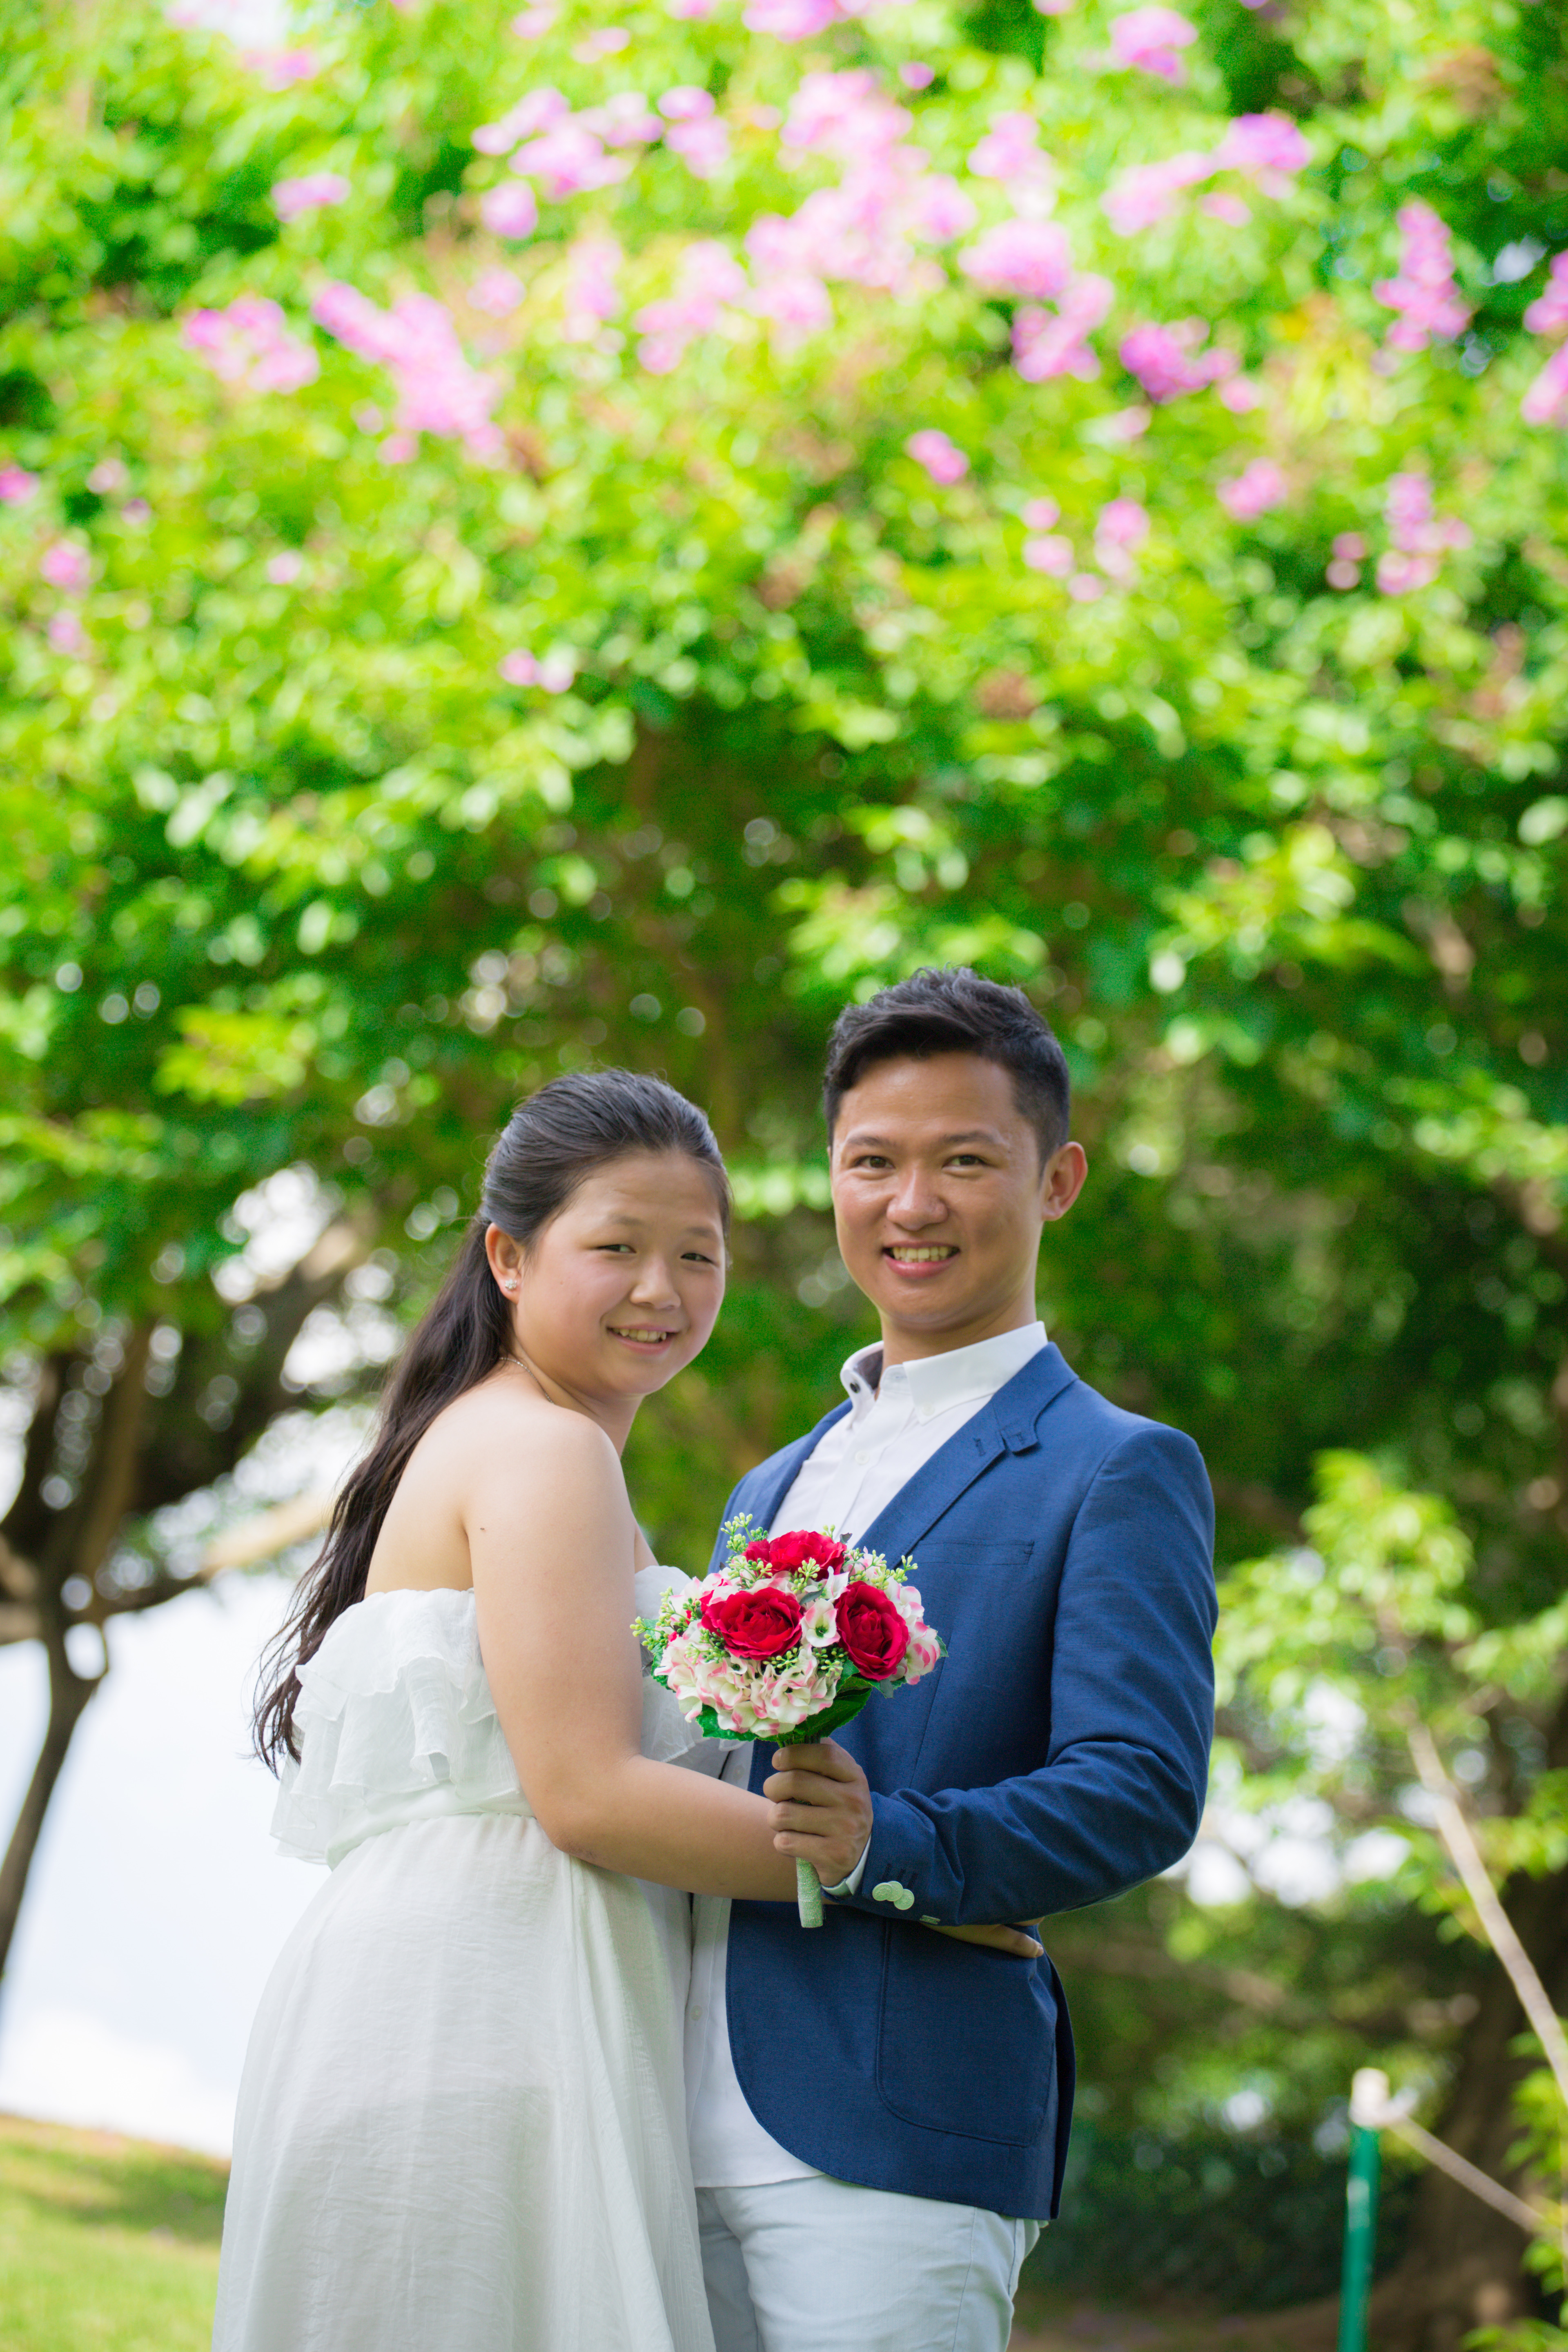 Andy Chau 之攝影師紀錄: 婚紗攝影 Local Prewedding Photography